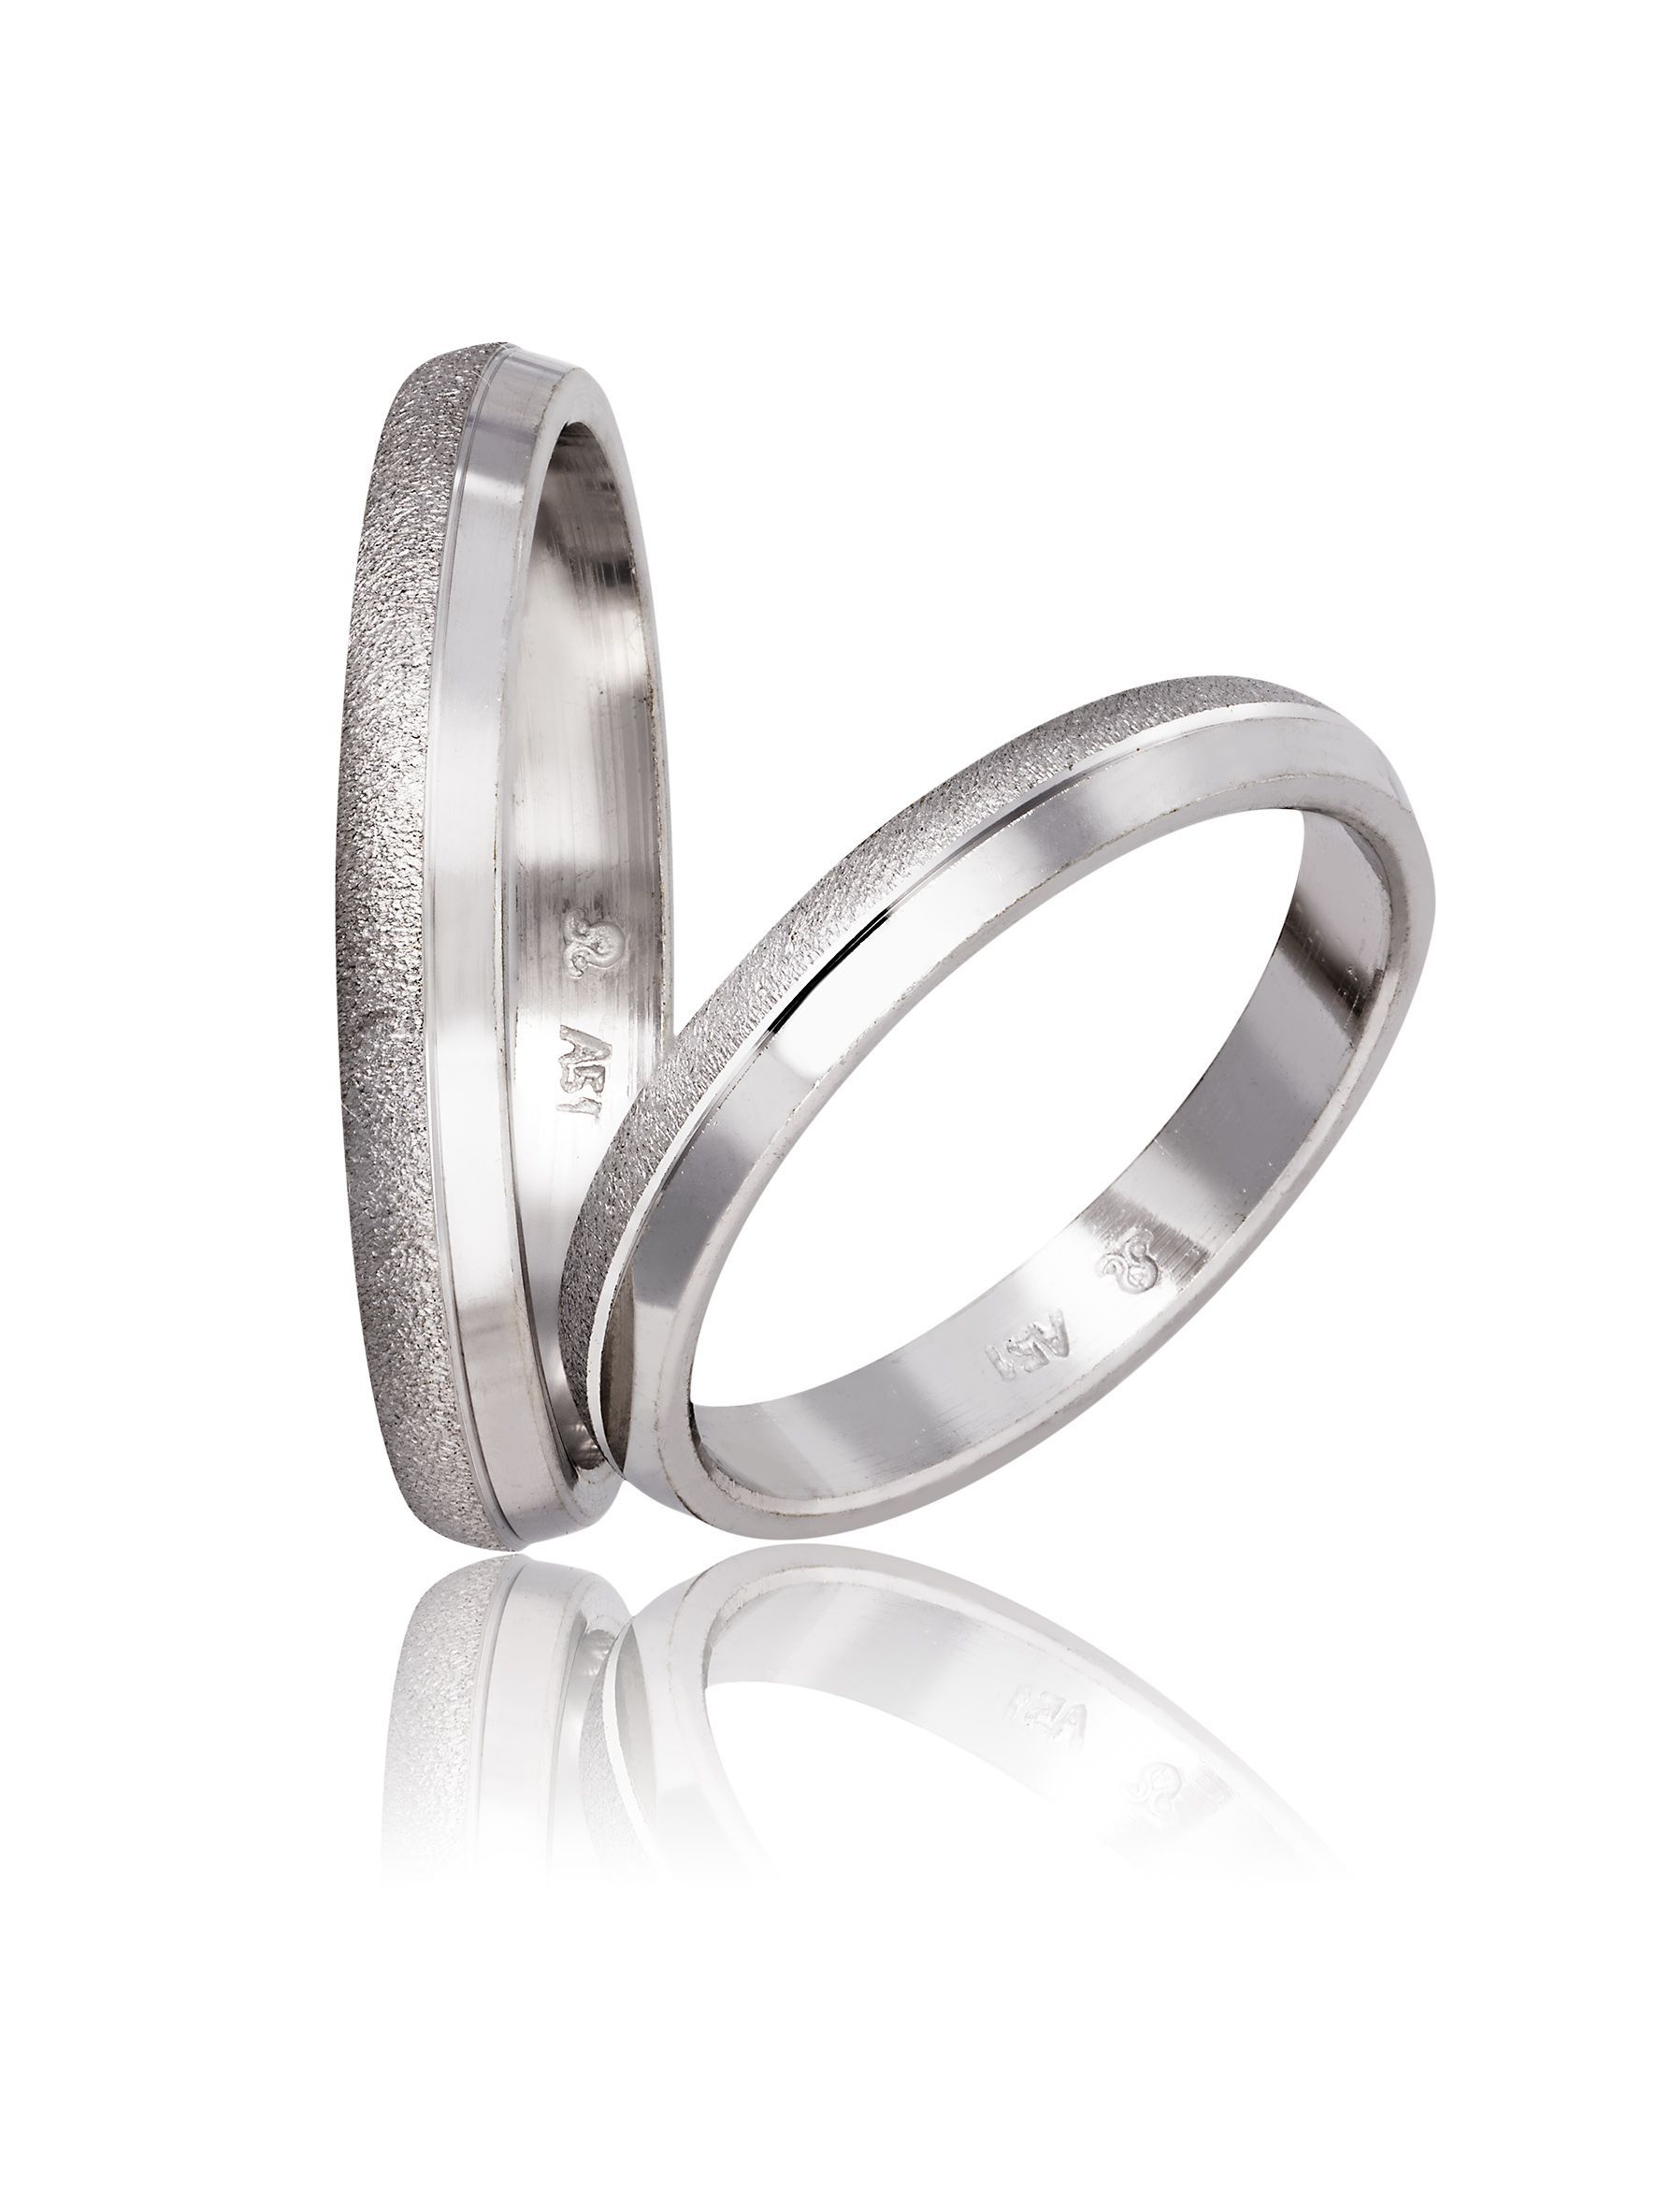 White gold wedding rings 3.2mm (code742)